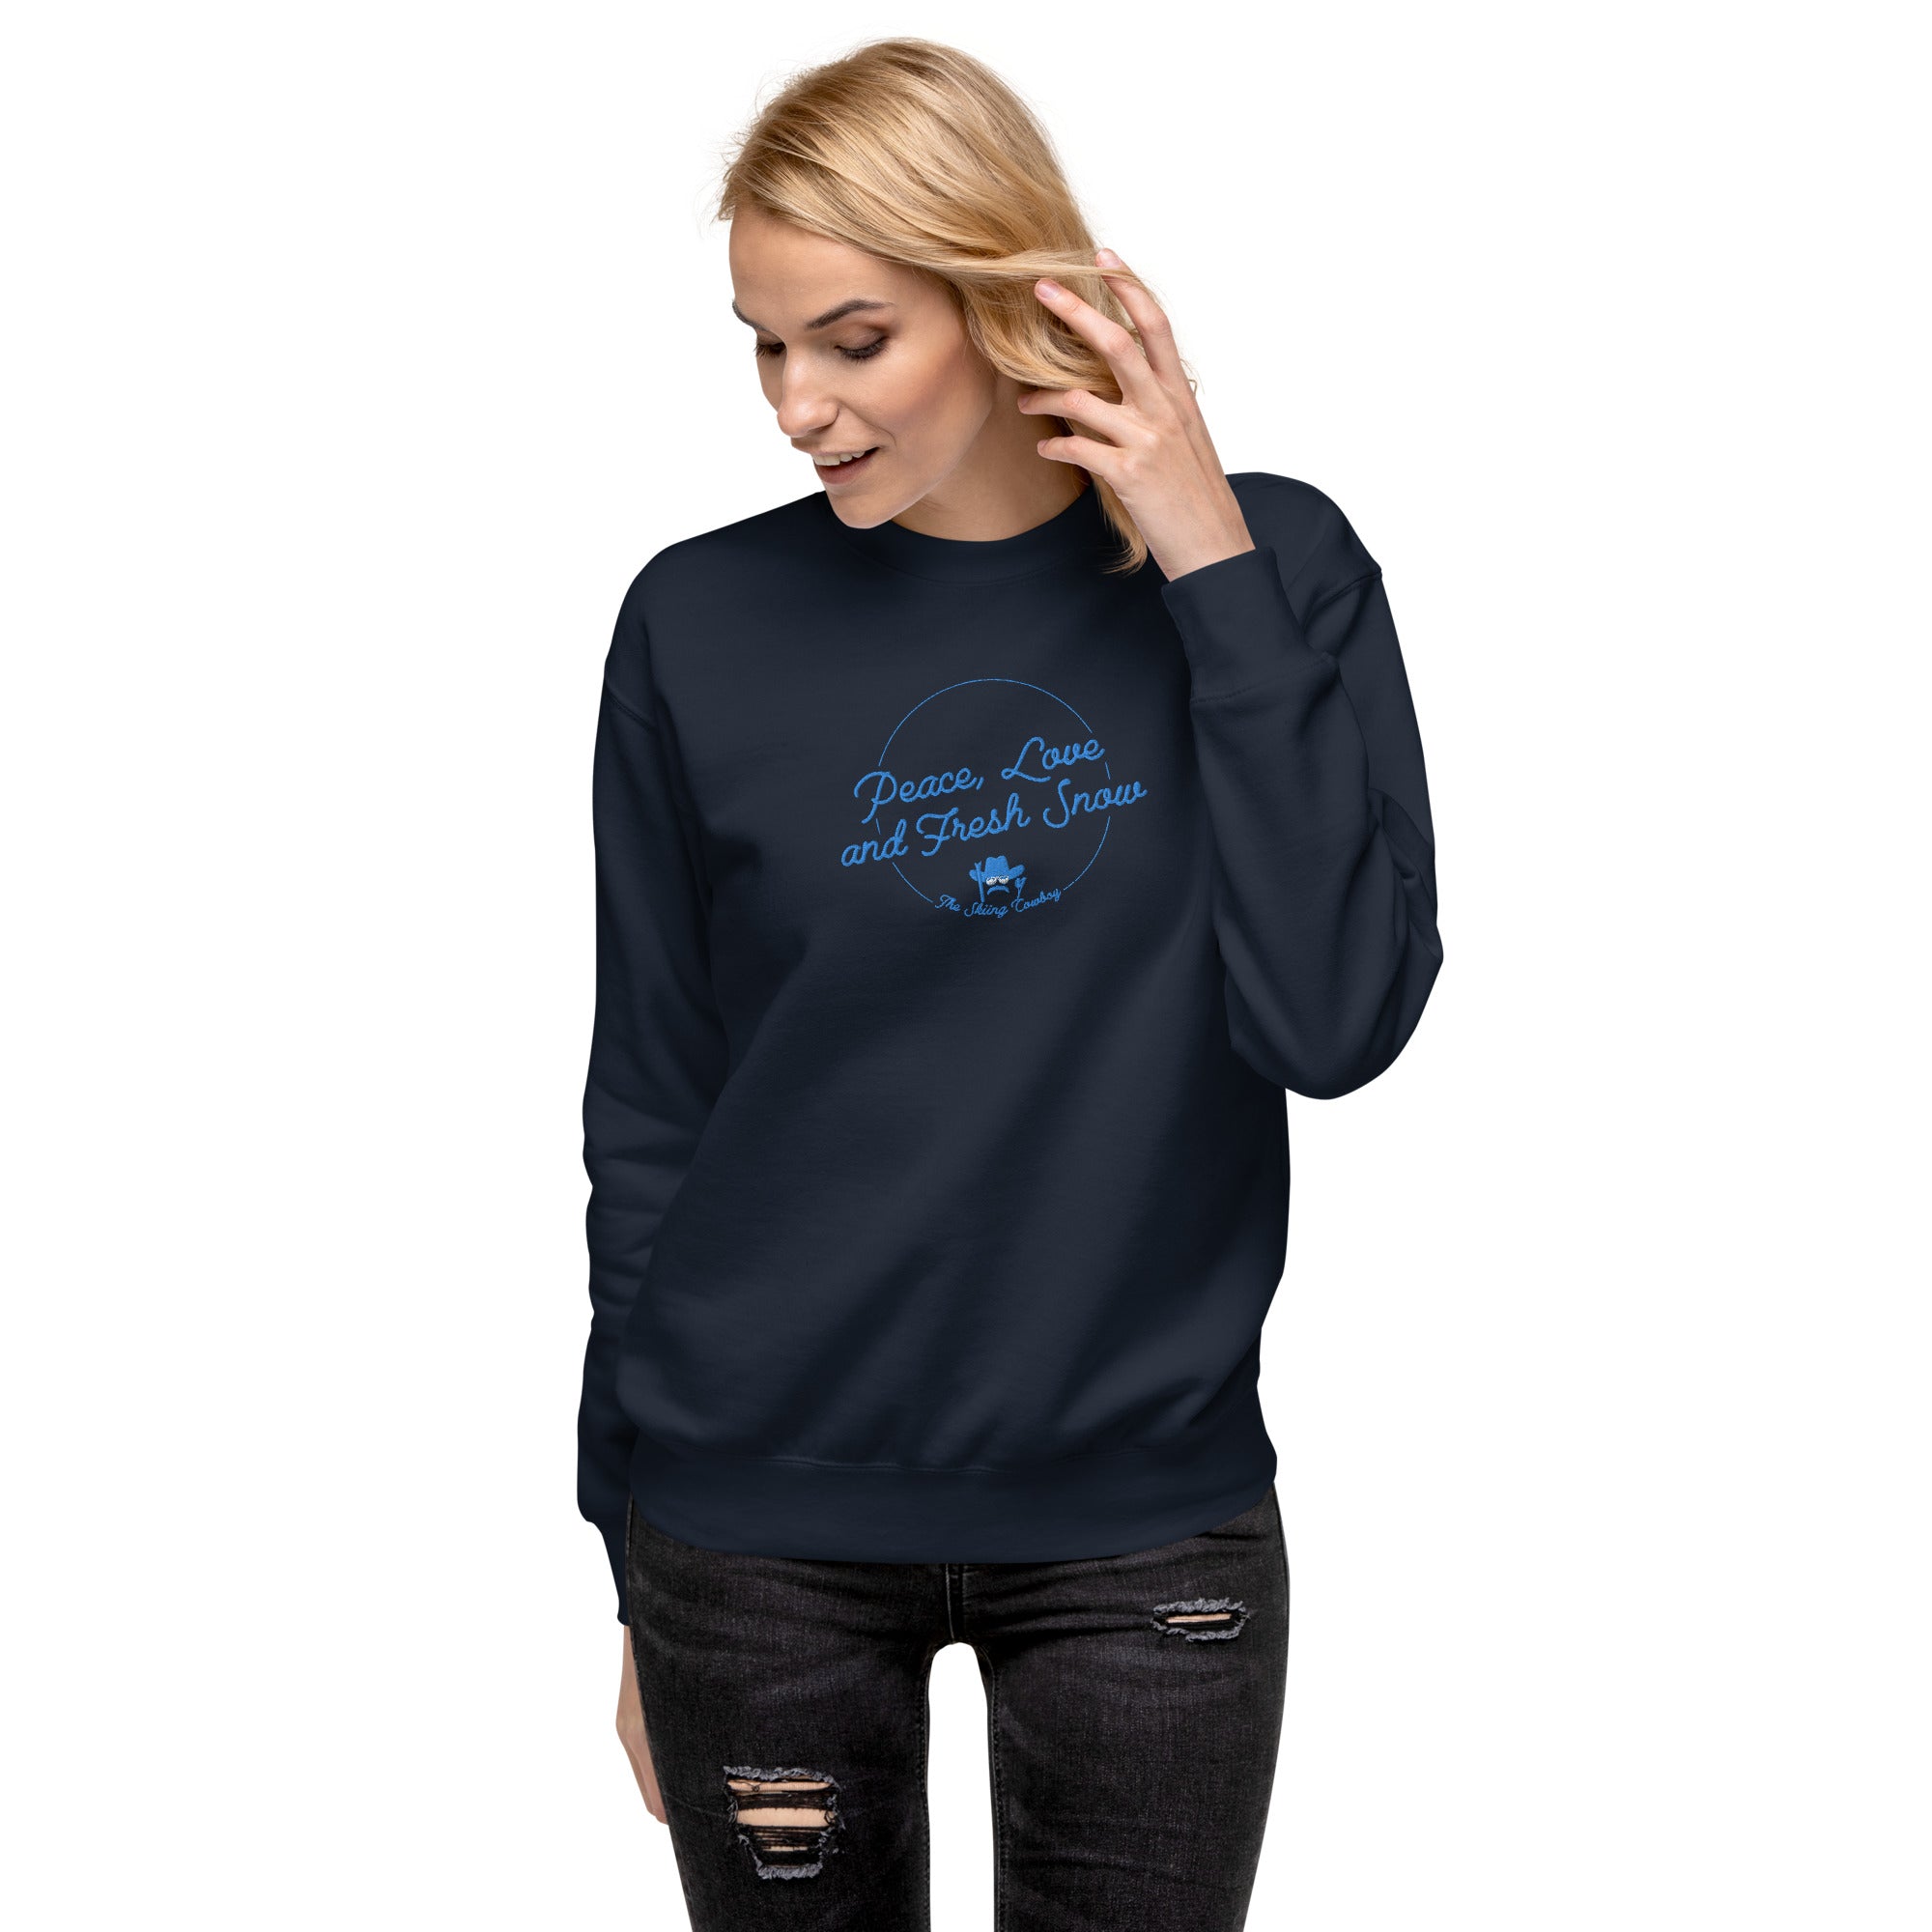 Unisex Premium Sweatshirt Peace, Love and Fresh Snow embroidered pattern